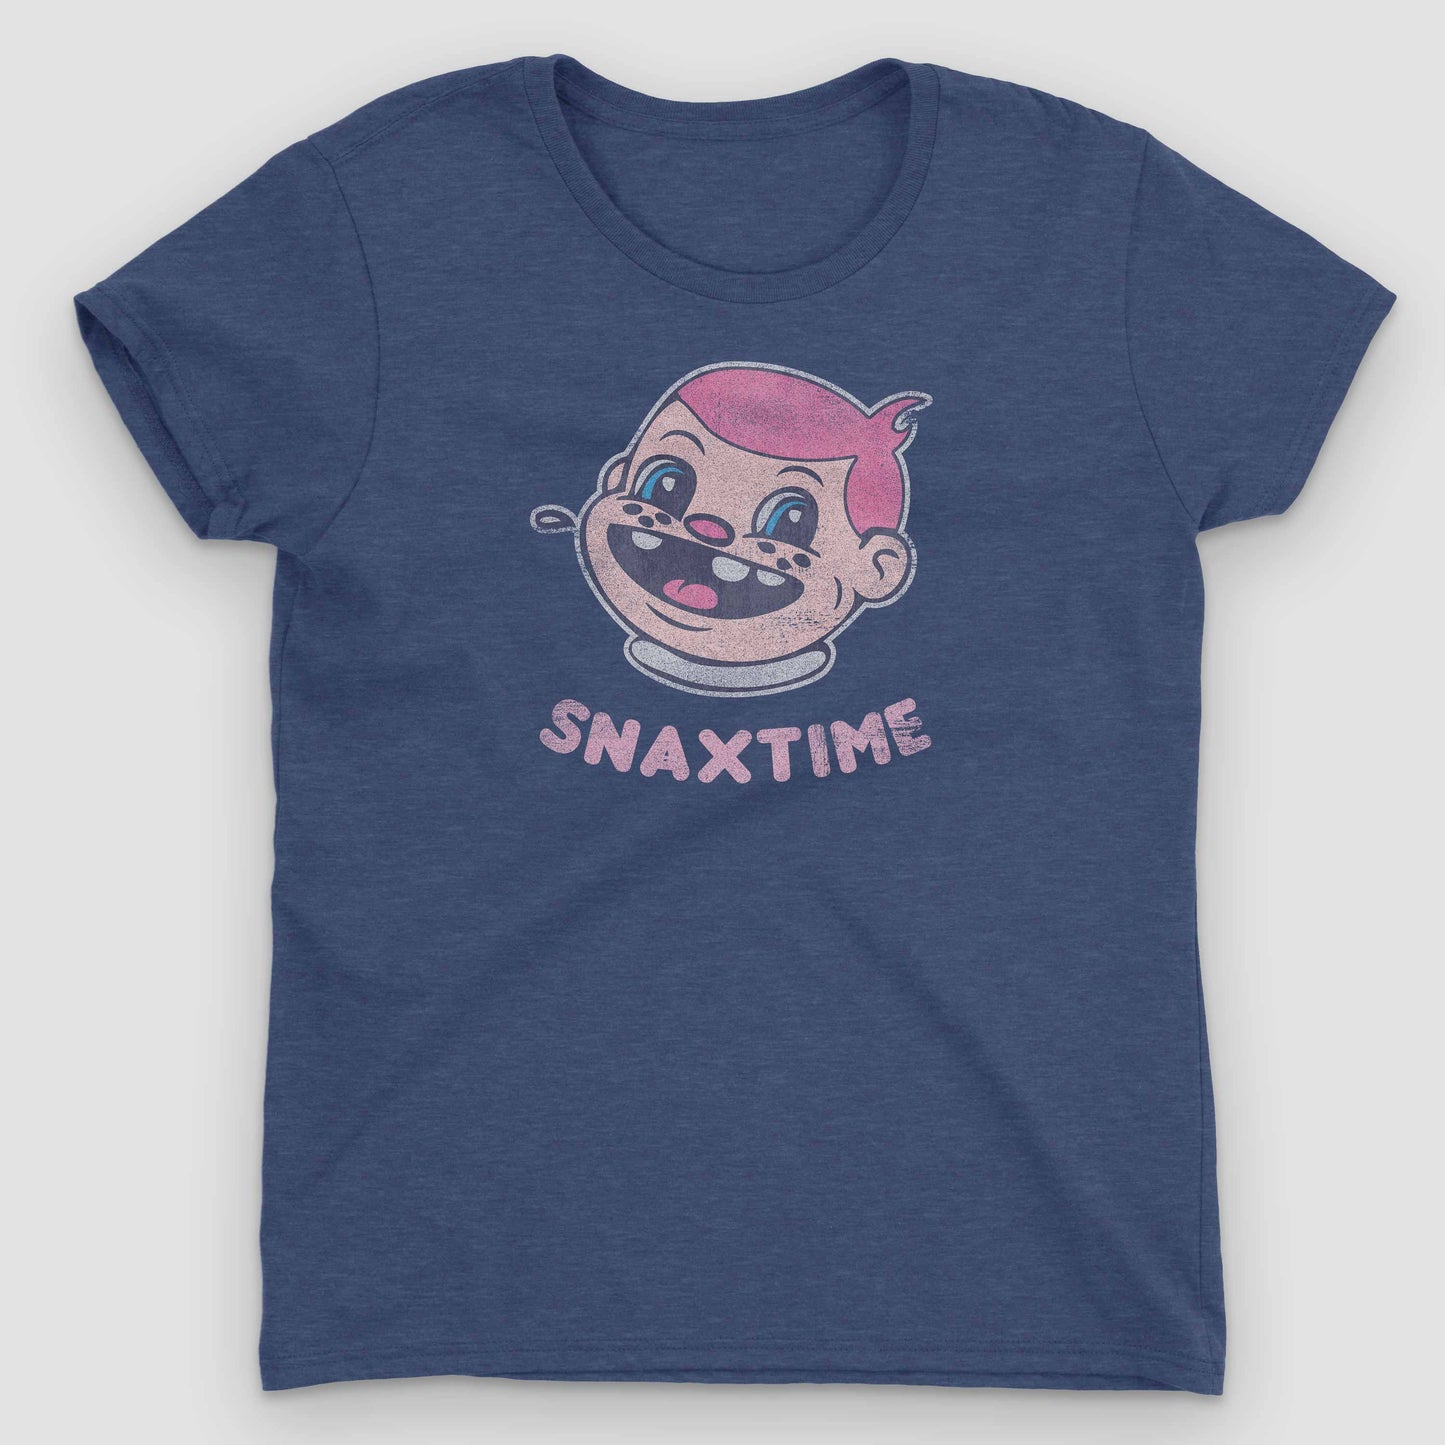 Heather Blue Snaxtime Original Women's Graphic T-Shirt by Snaxtime